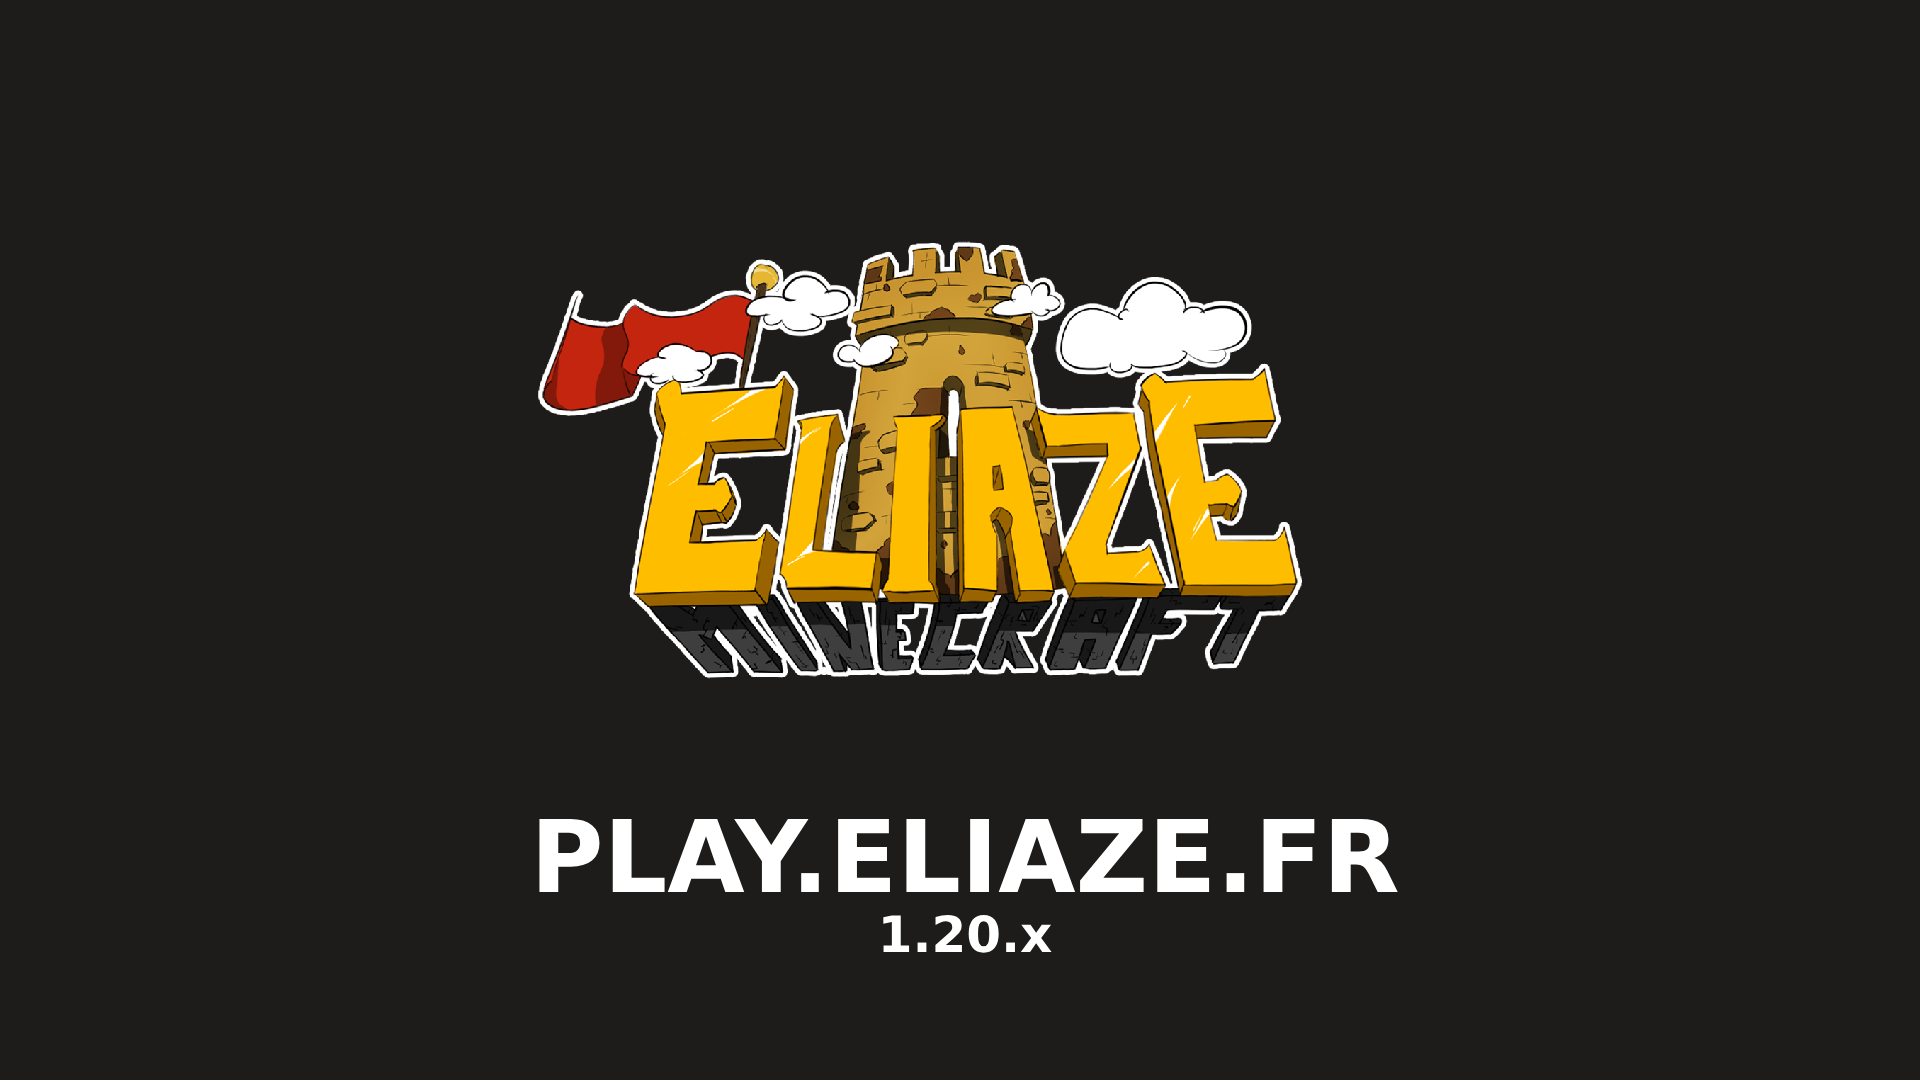 PLAY.ELIAZE.FR - 1.20.x